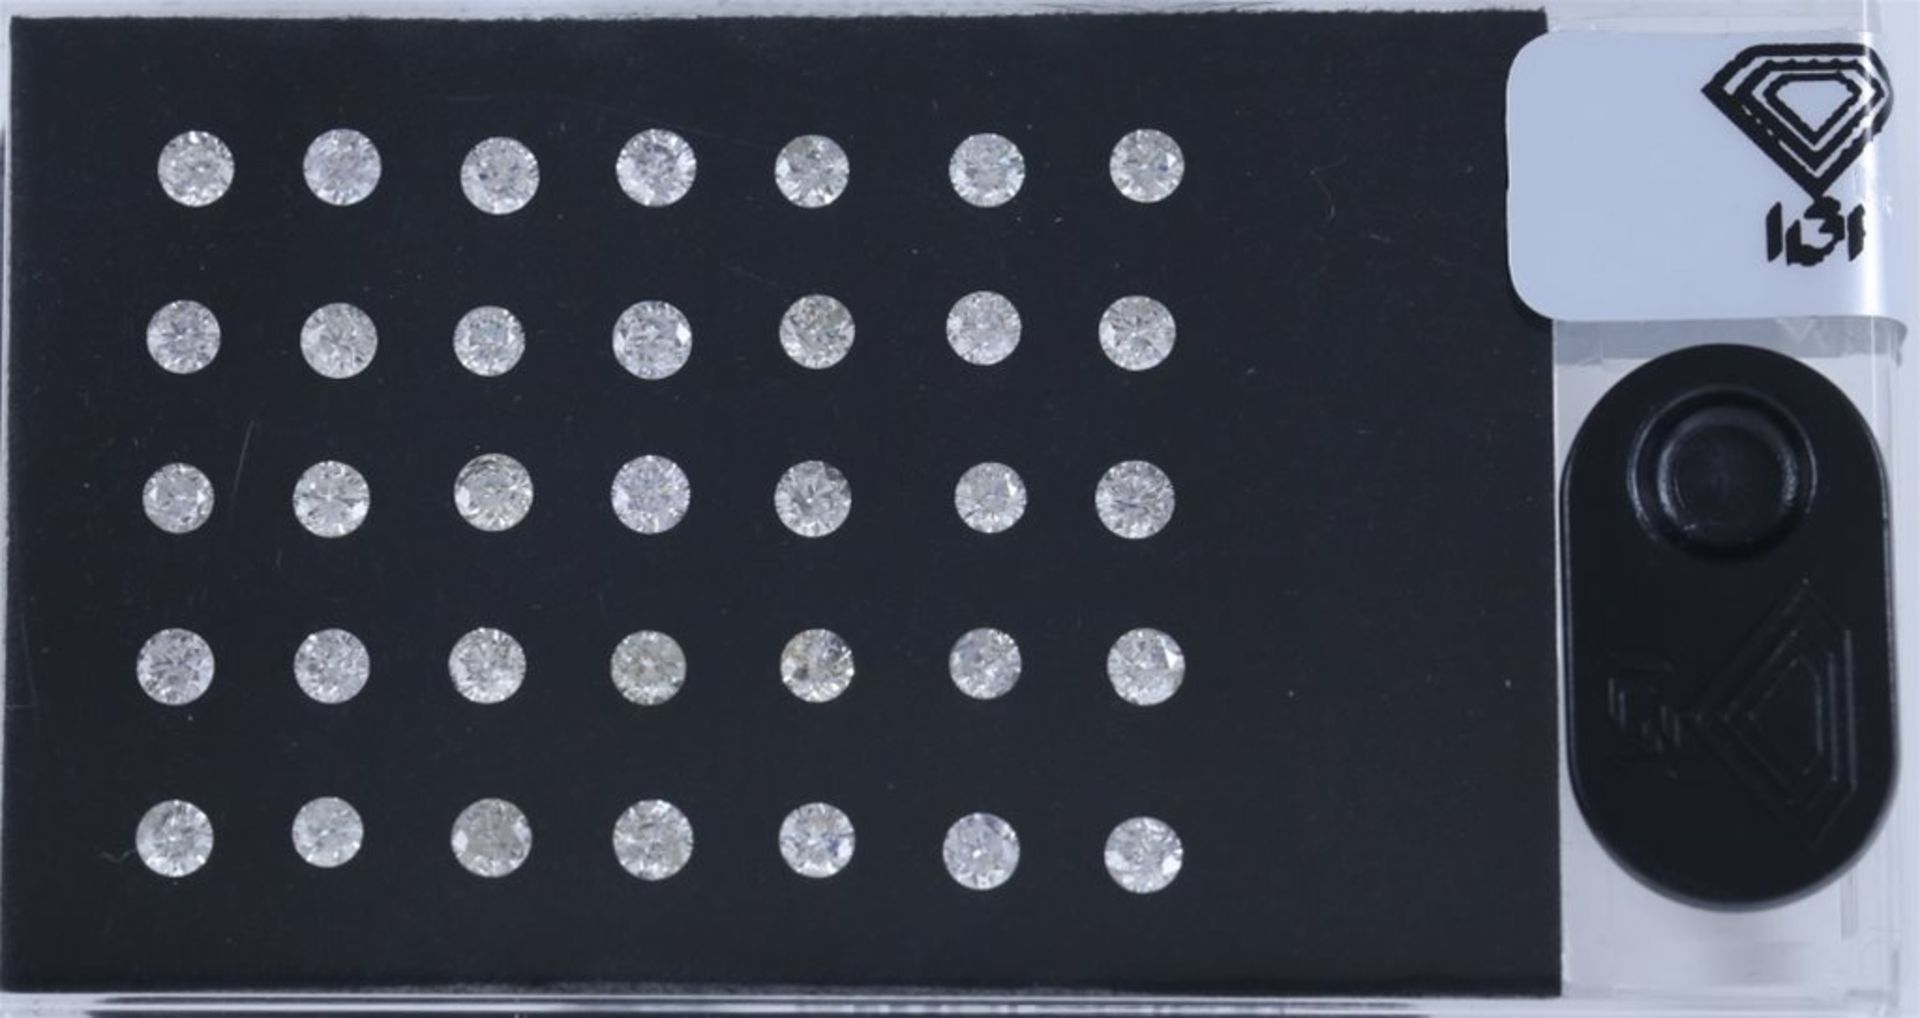 IGI Sealed 2.38 ct. "Diamond D-Box" - Round Brilliant Natural Diamonds - Image 3 of 3